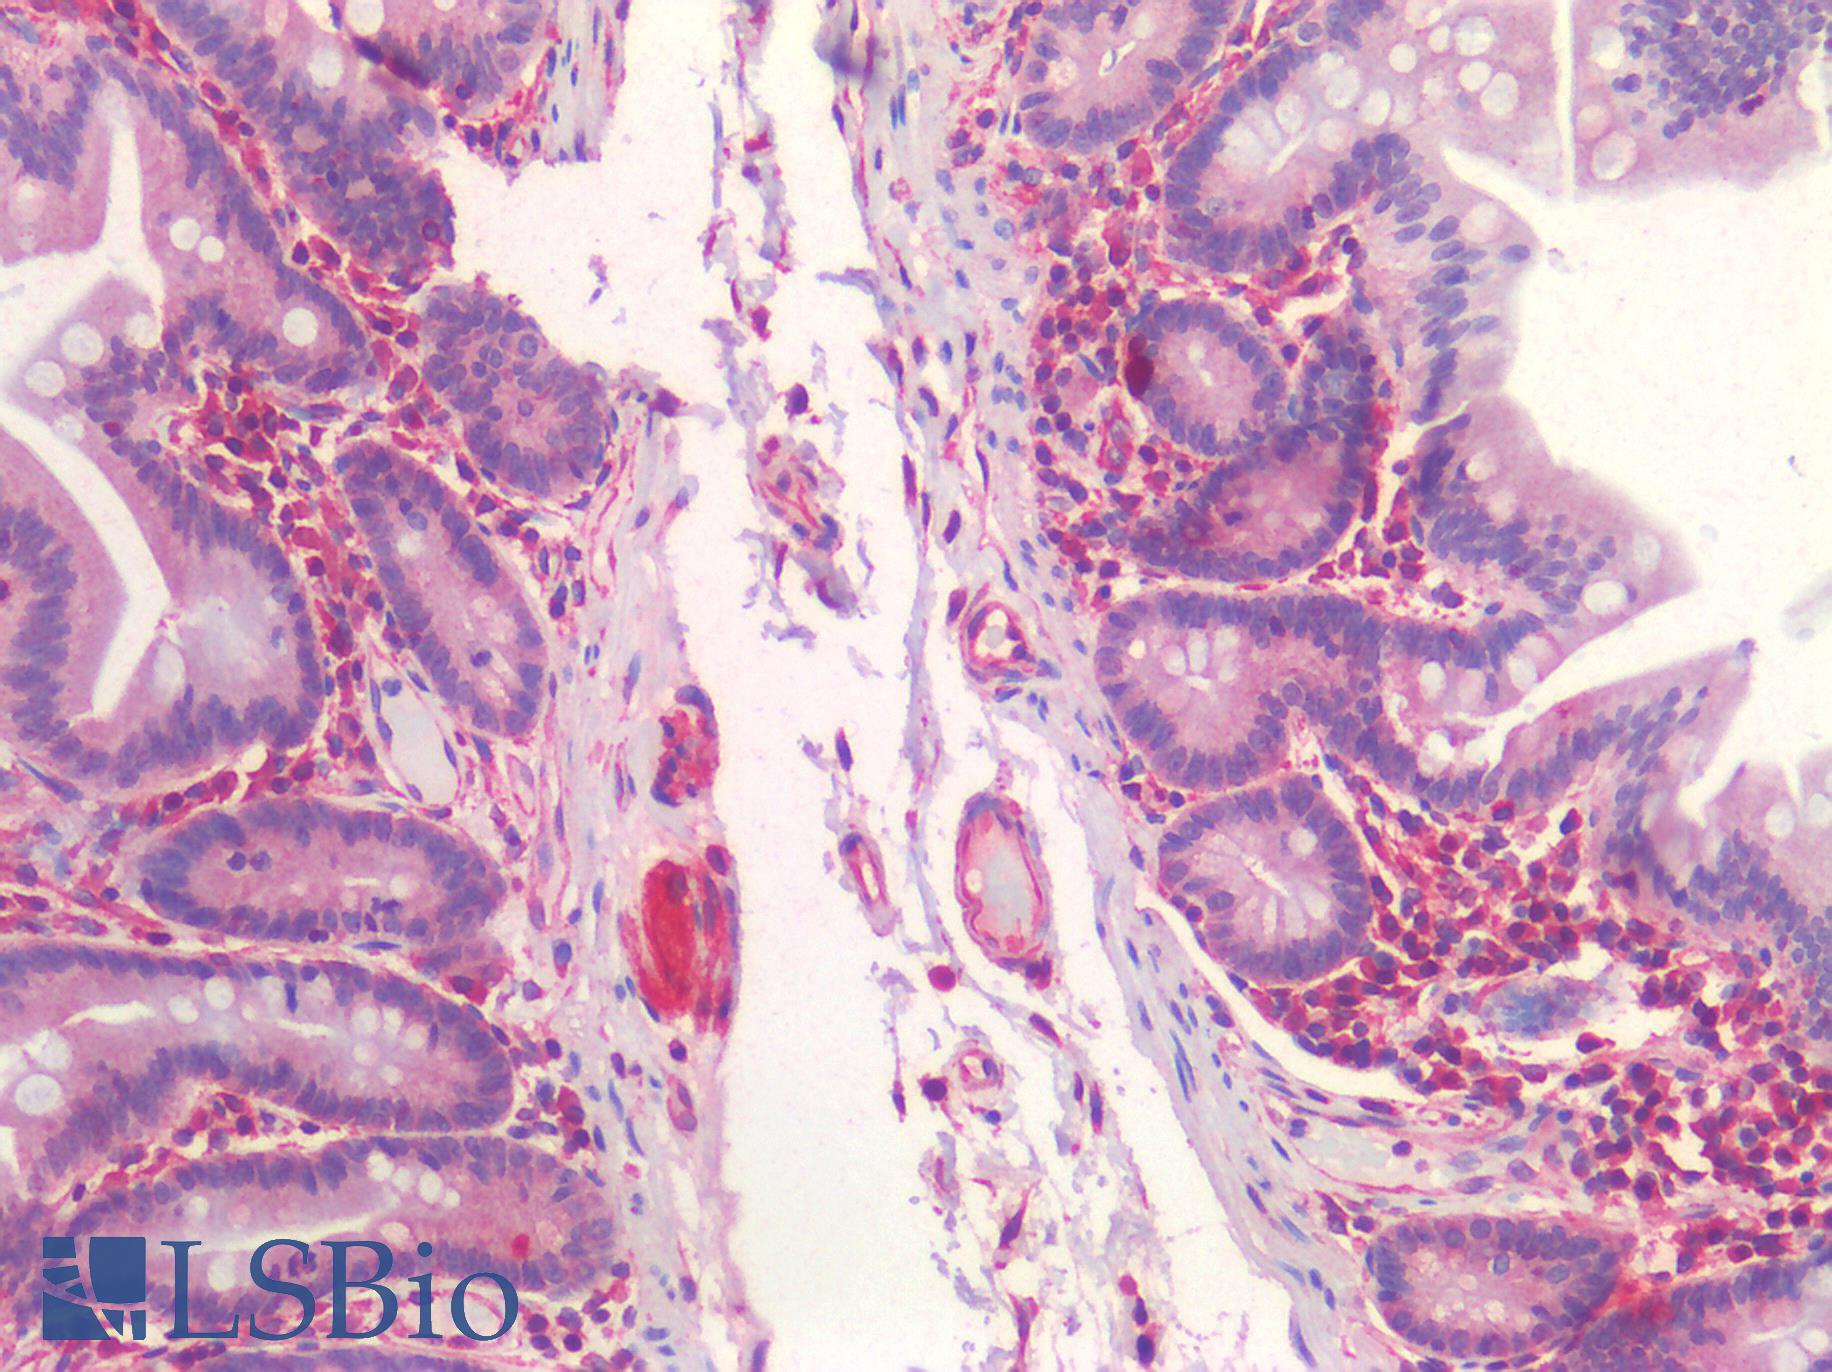 SST / Somatostatin Antibody - Human Small Intestine: Formalin-Fixed, Paraffin-Embedded (FFPE)